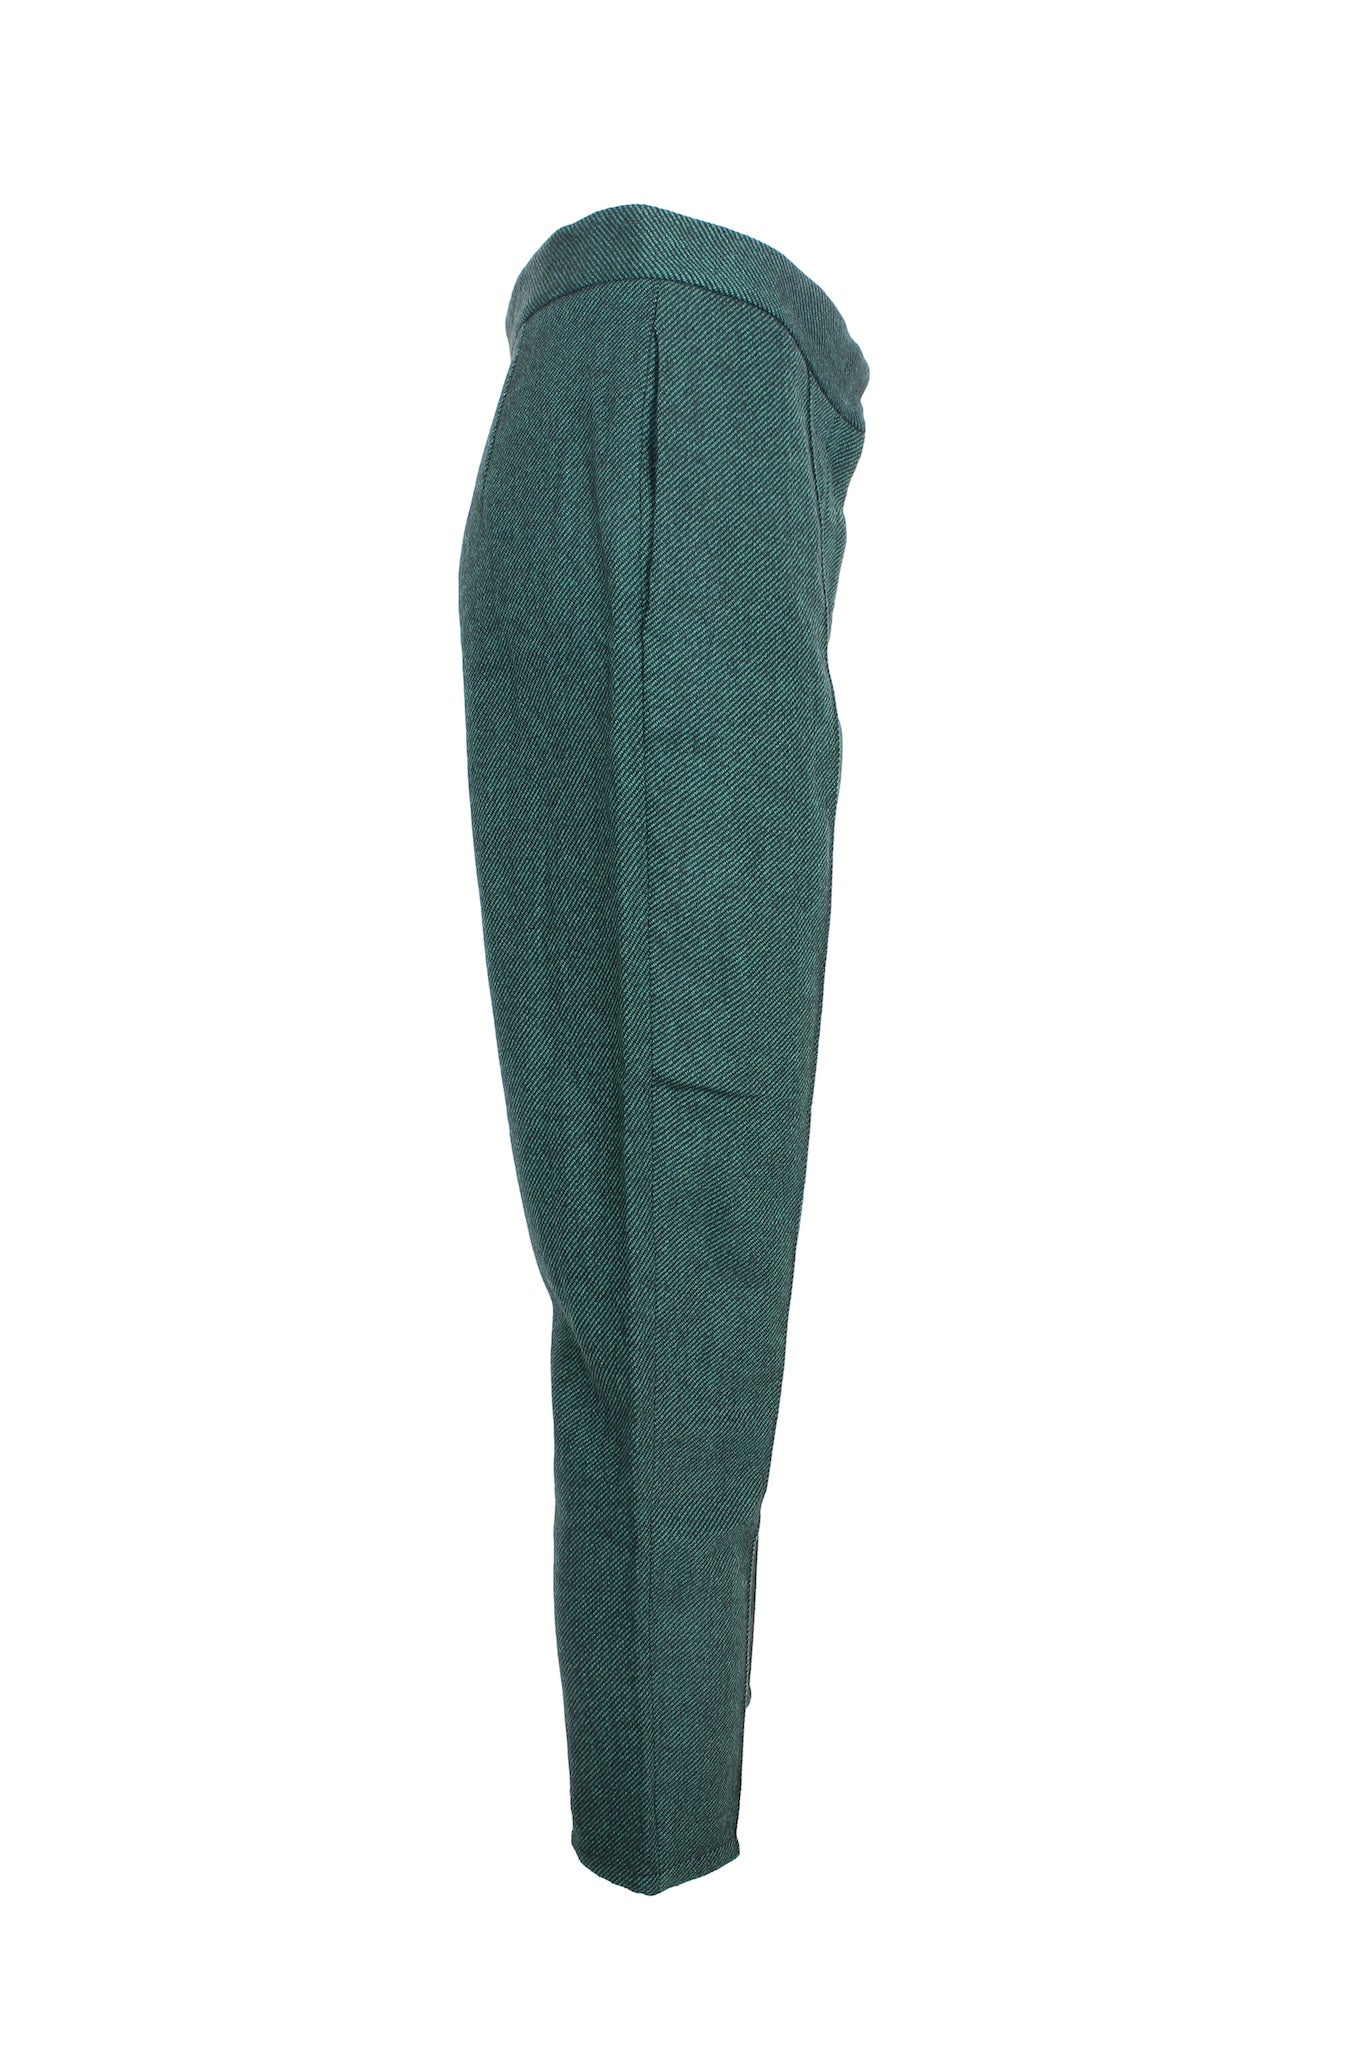 Stella McCartney Green Wool Capri Pants 2000s